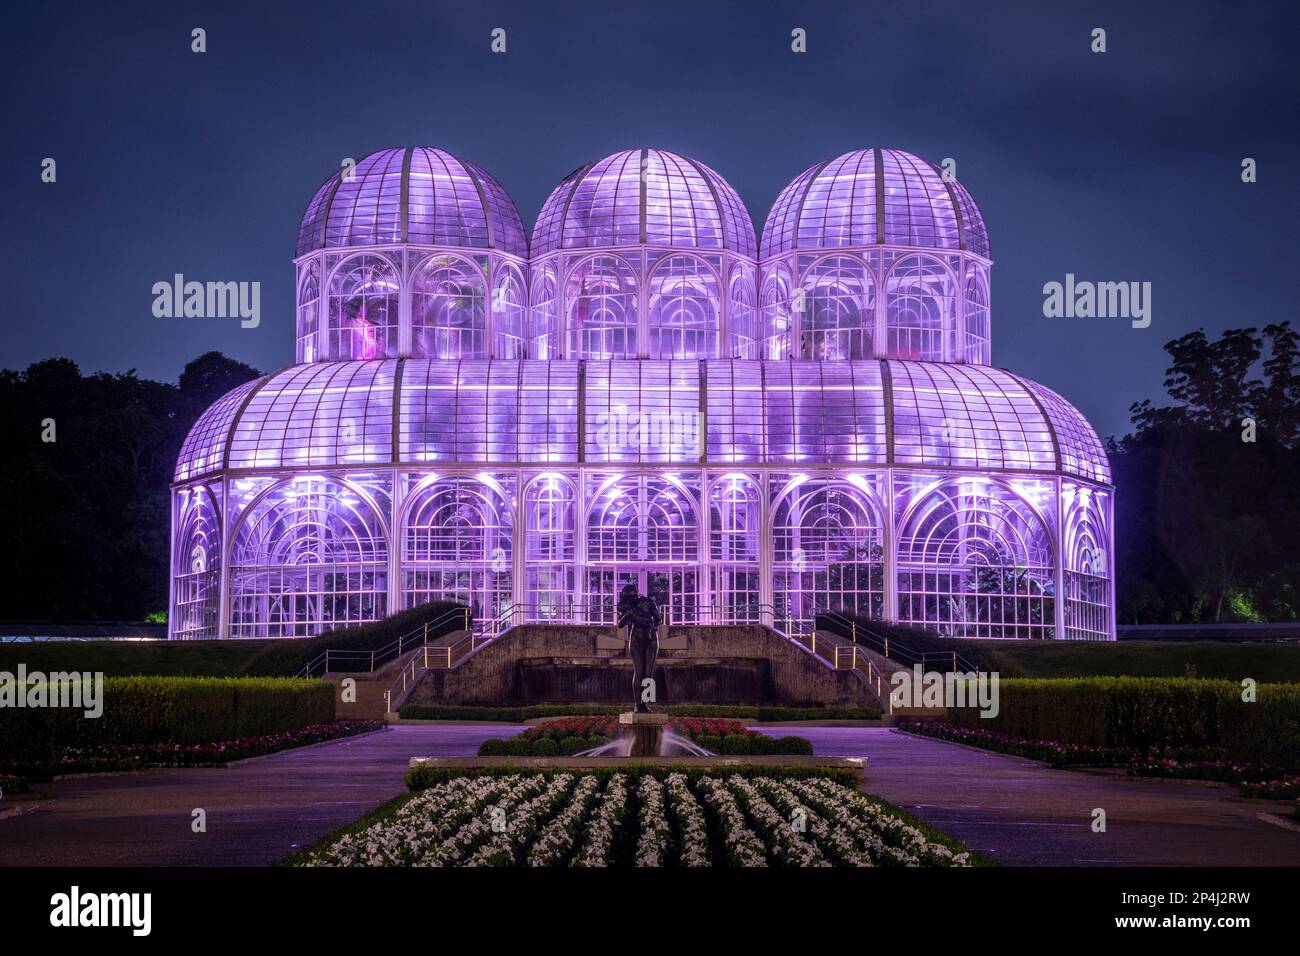 Beautiful view to glass greenhouse building shining purple at night Stock Photo